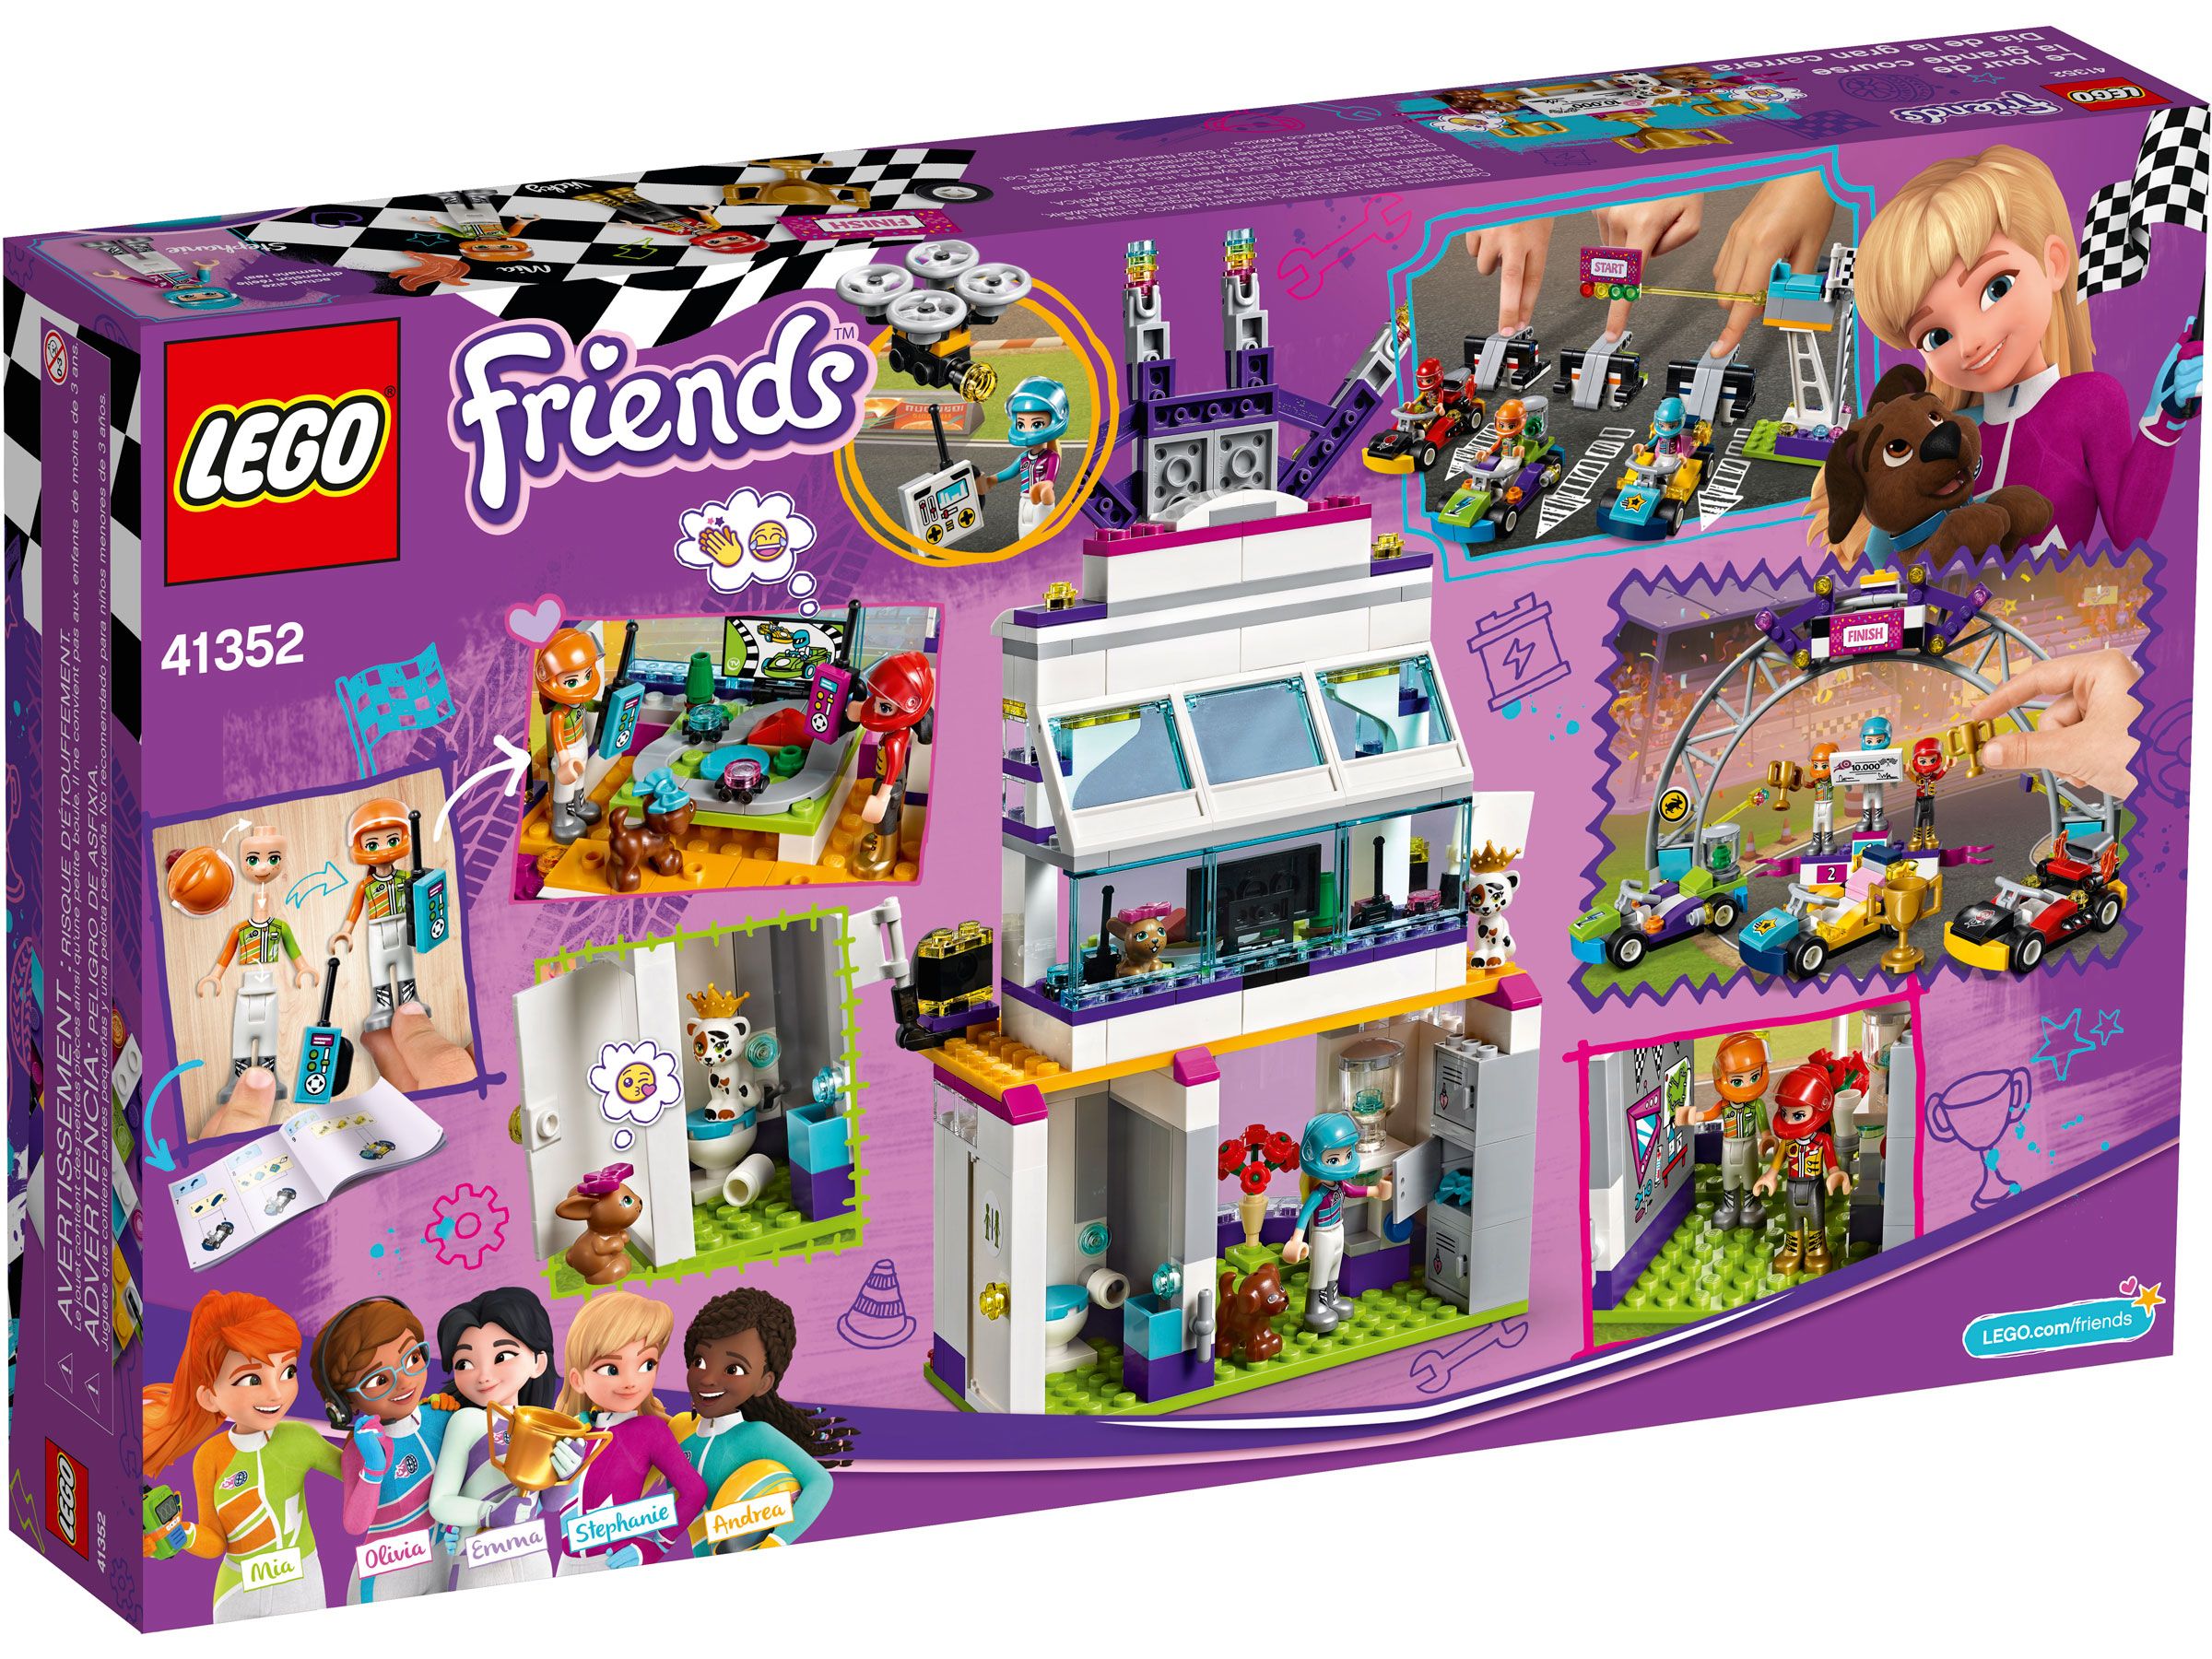 LEGO Friends 41352 Das große Rennen LEGO_41352_Box5_v39.jpg